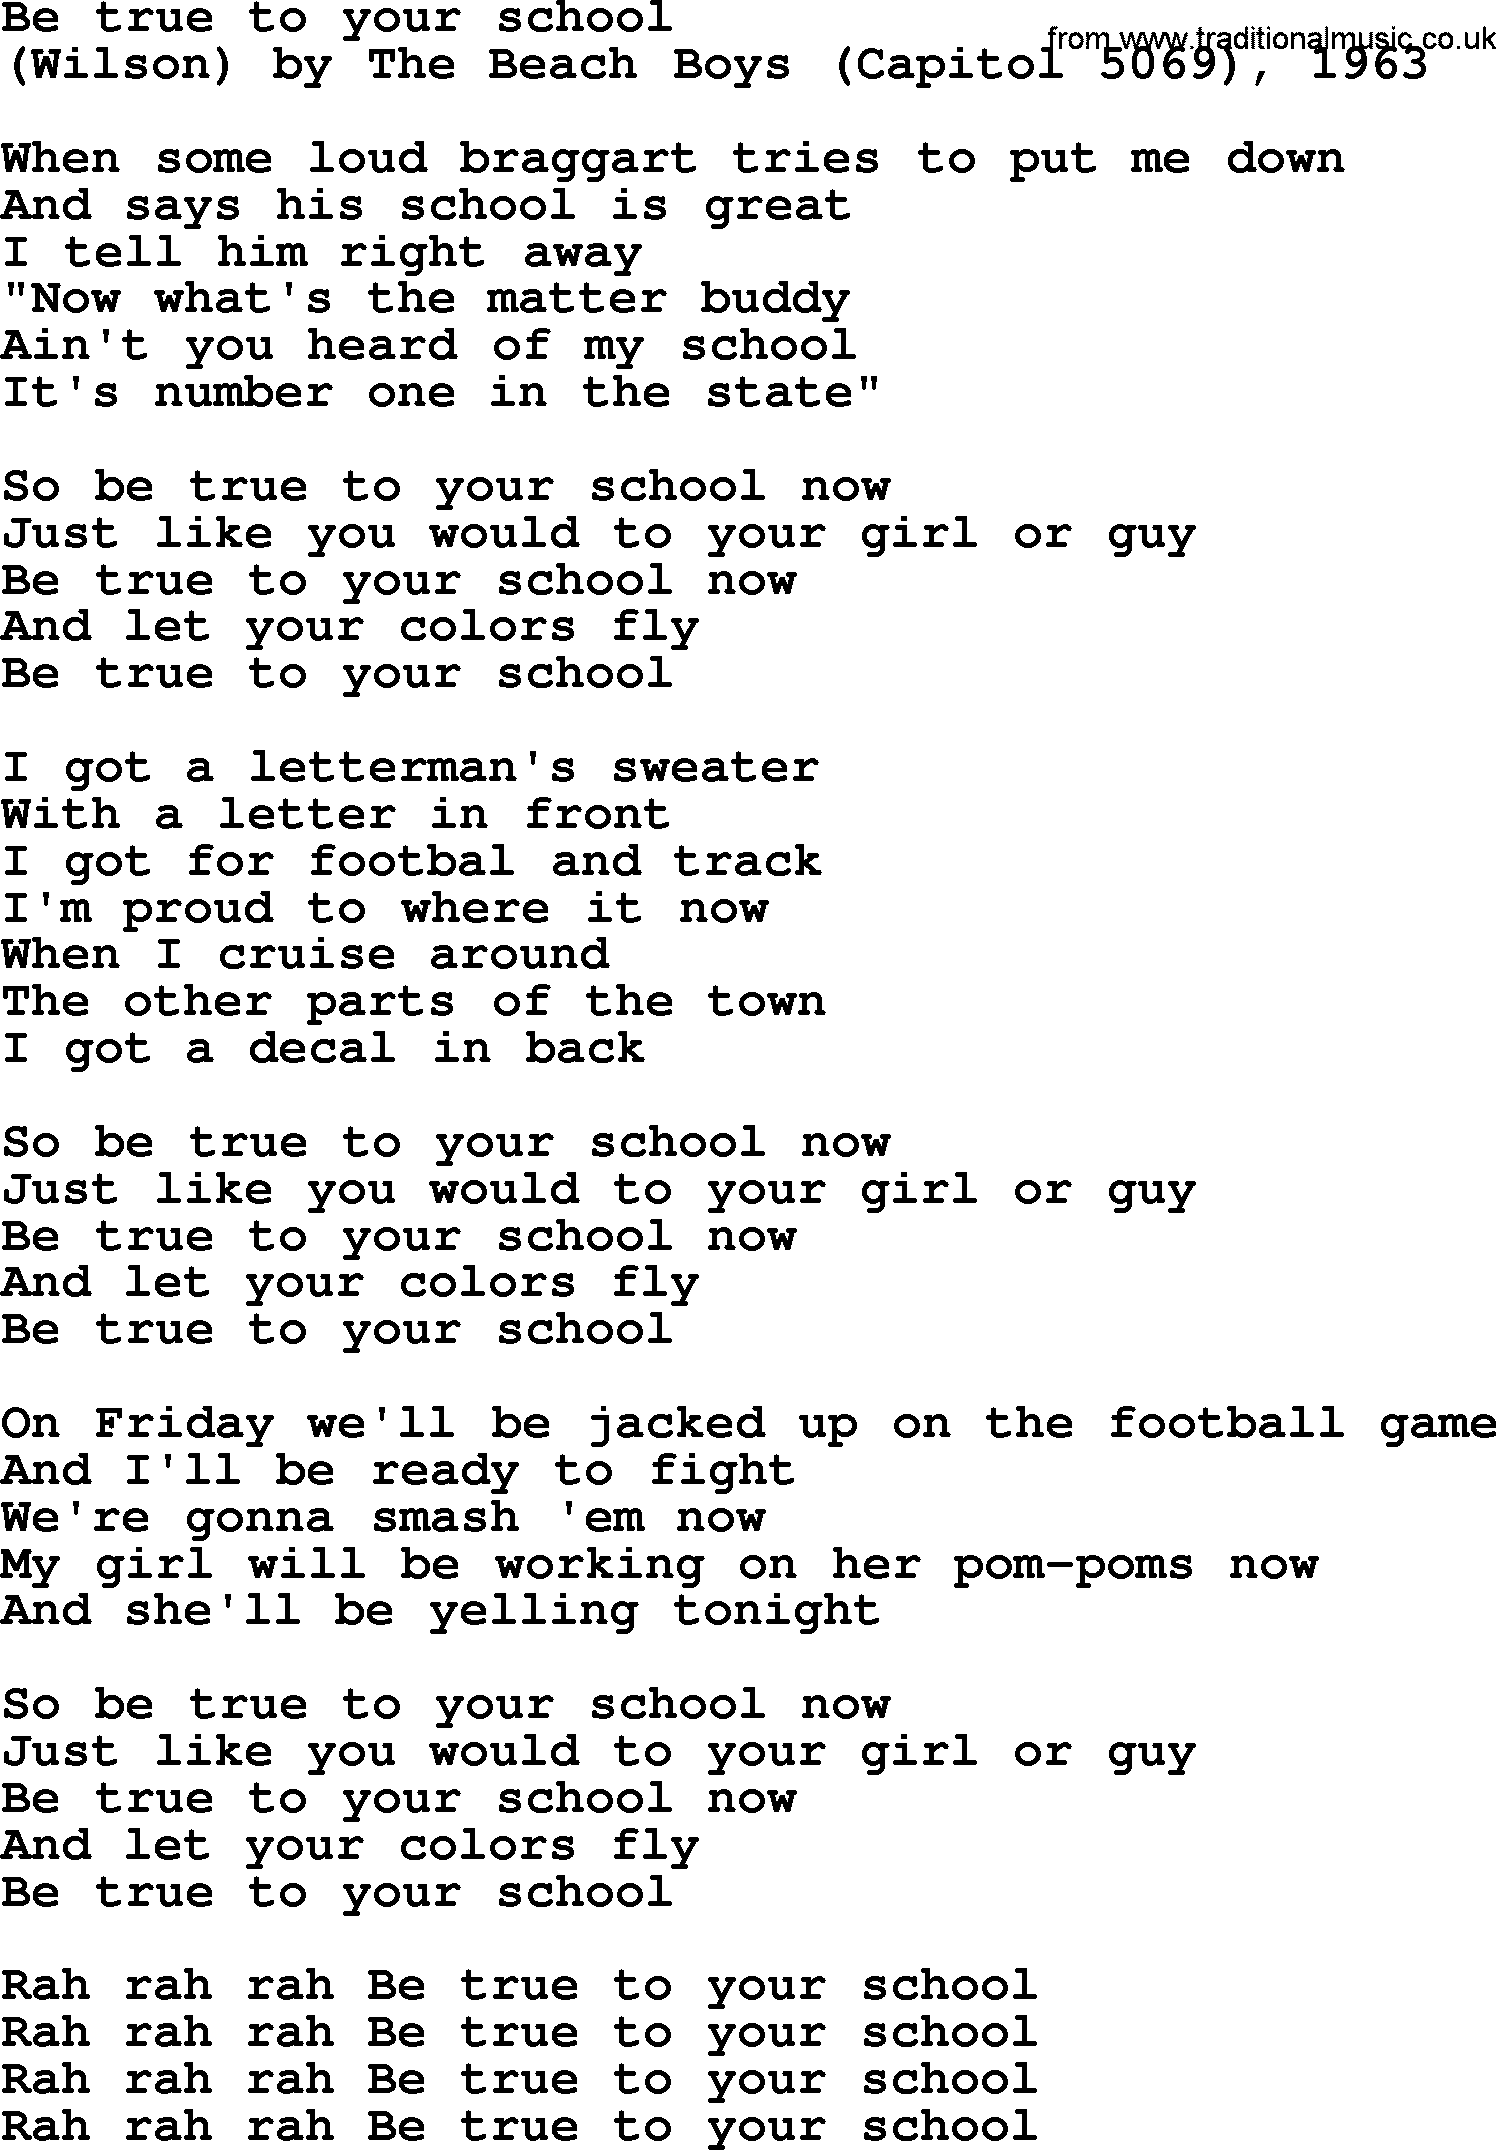 Bruce Springsteen song: Be True To Your School lyrics